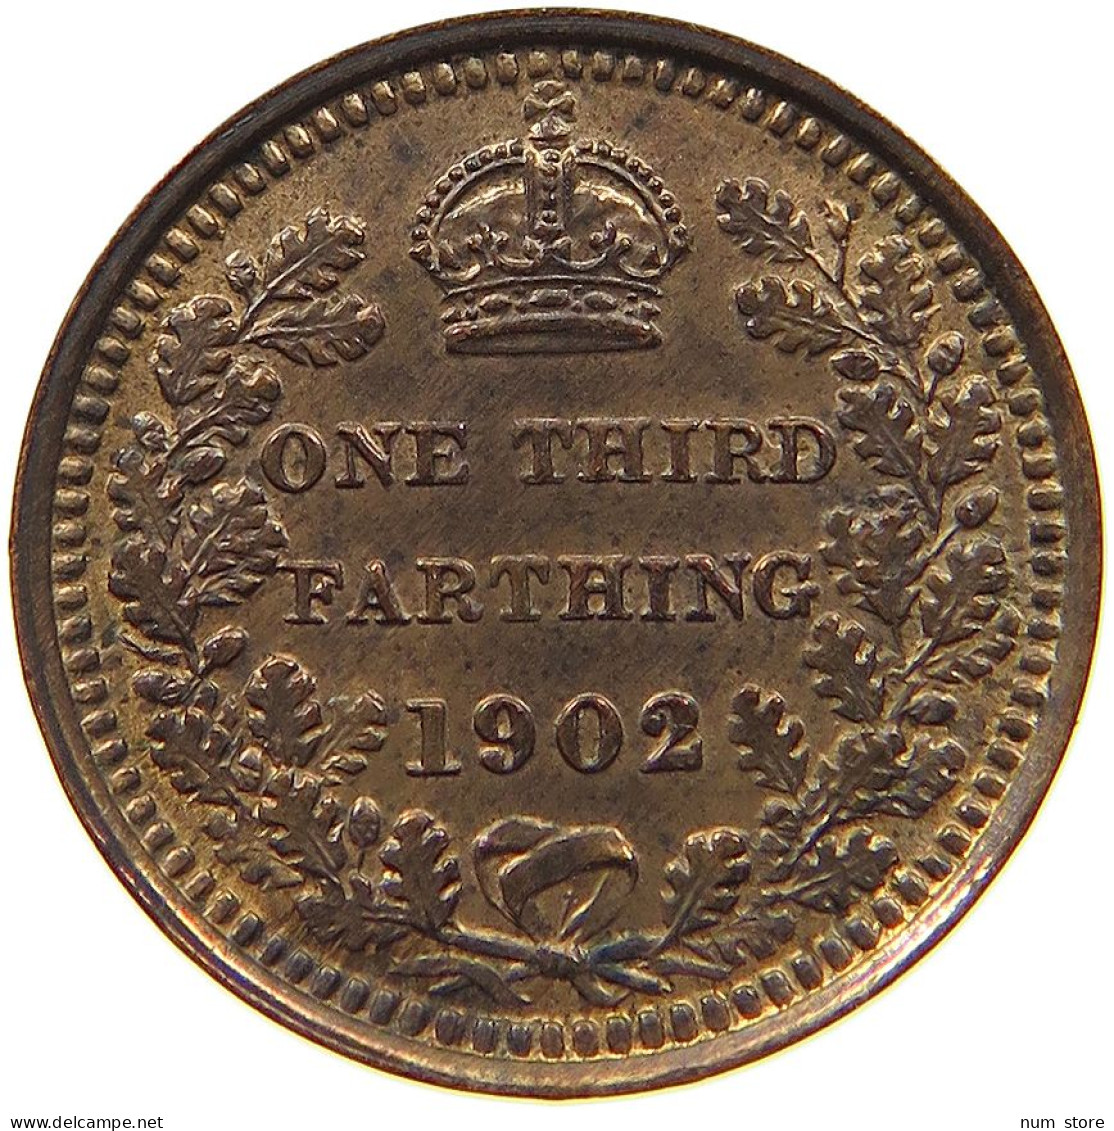 GREAT BRITAIN 1/3 FARTHING 1902 Edward VII., 1901 - 1910 #t107 0225 - A. 1/4 - 1/3 - 1/2 Farthing